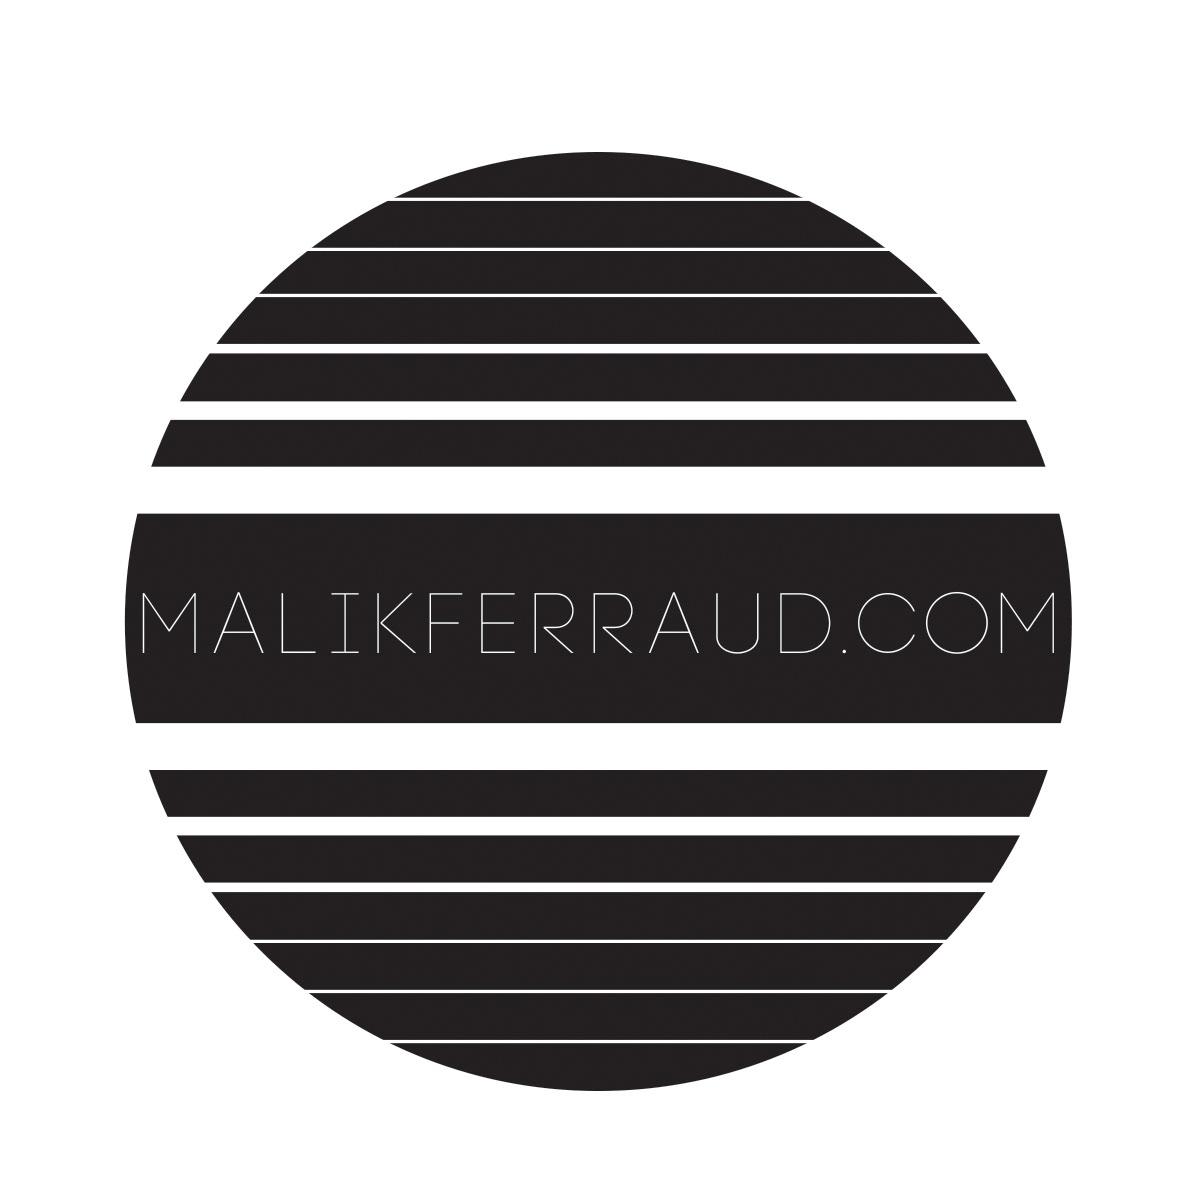 Malik Ferraud matt hodin album cover Changes design Matt Hodin Design music art album art sxsw